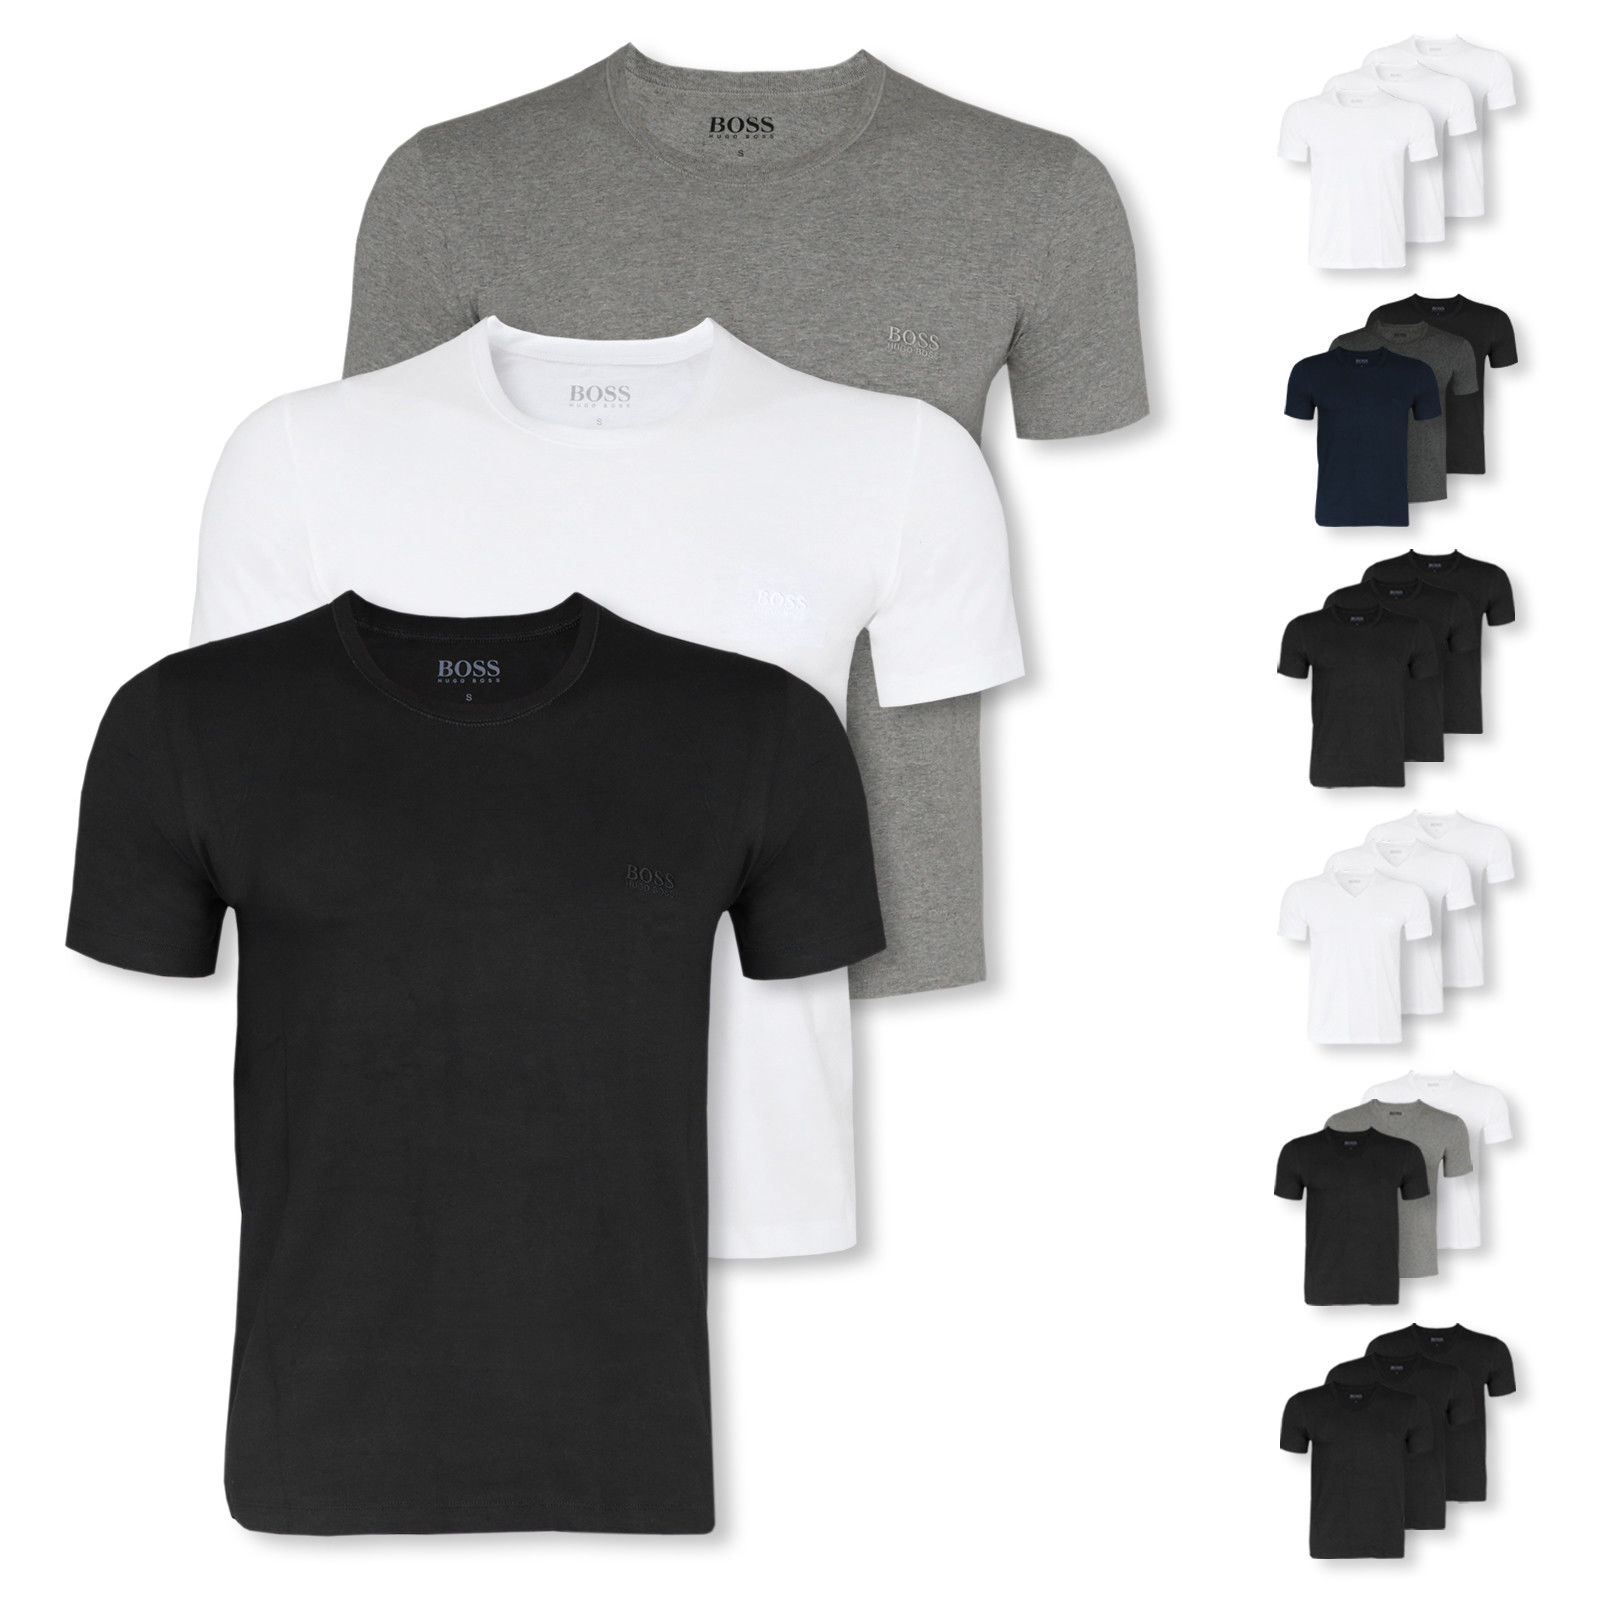 3er Pack HUGO BOSS Herren T-Shirts Shirts kurzarm Crew-Neck V-Neck Farbwahl